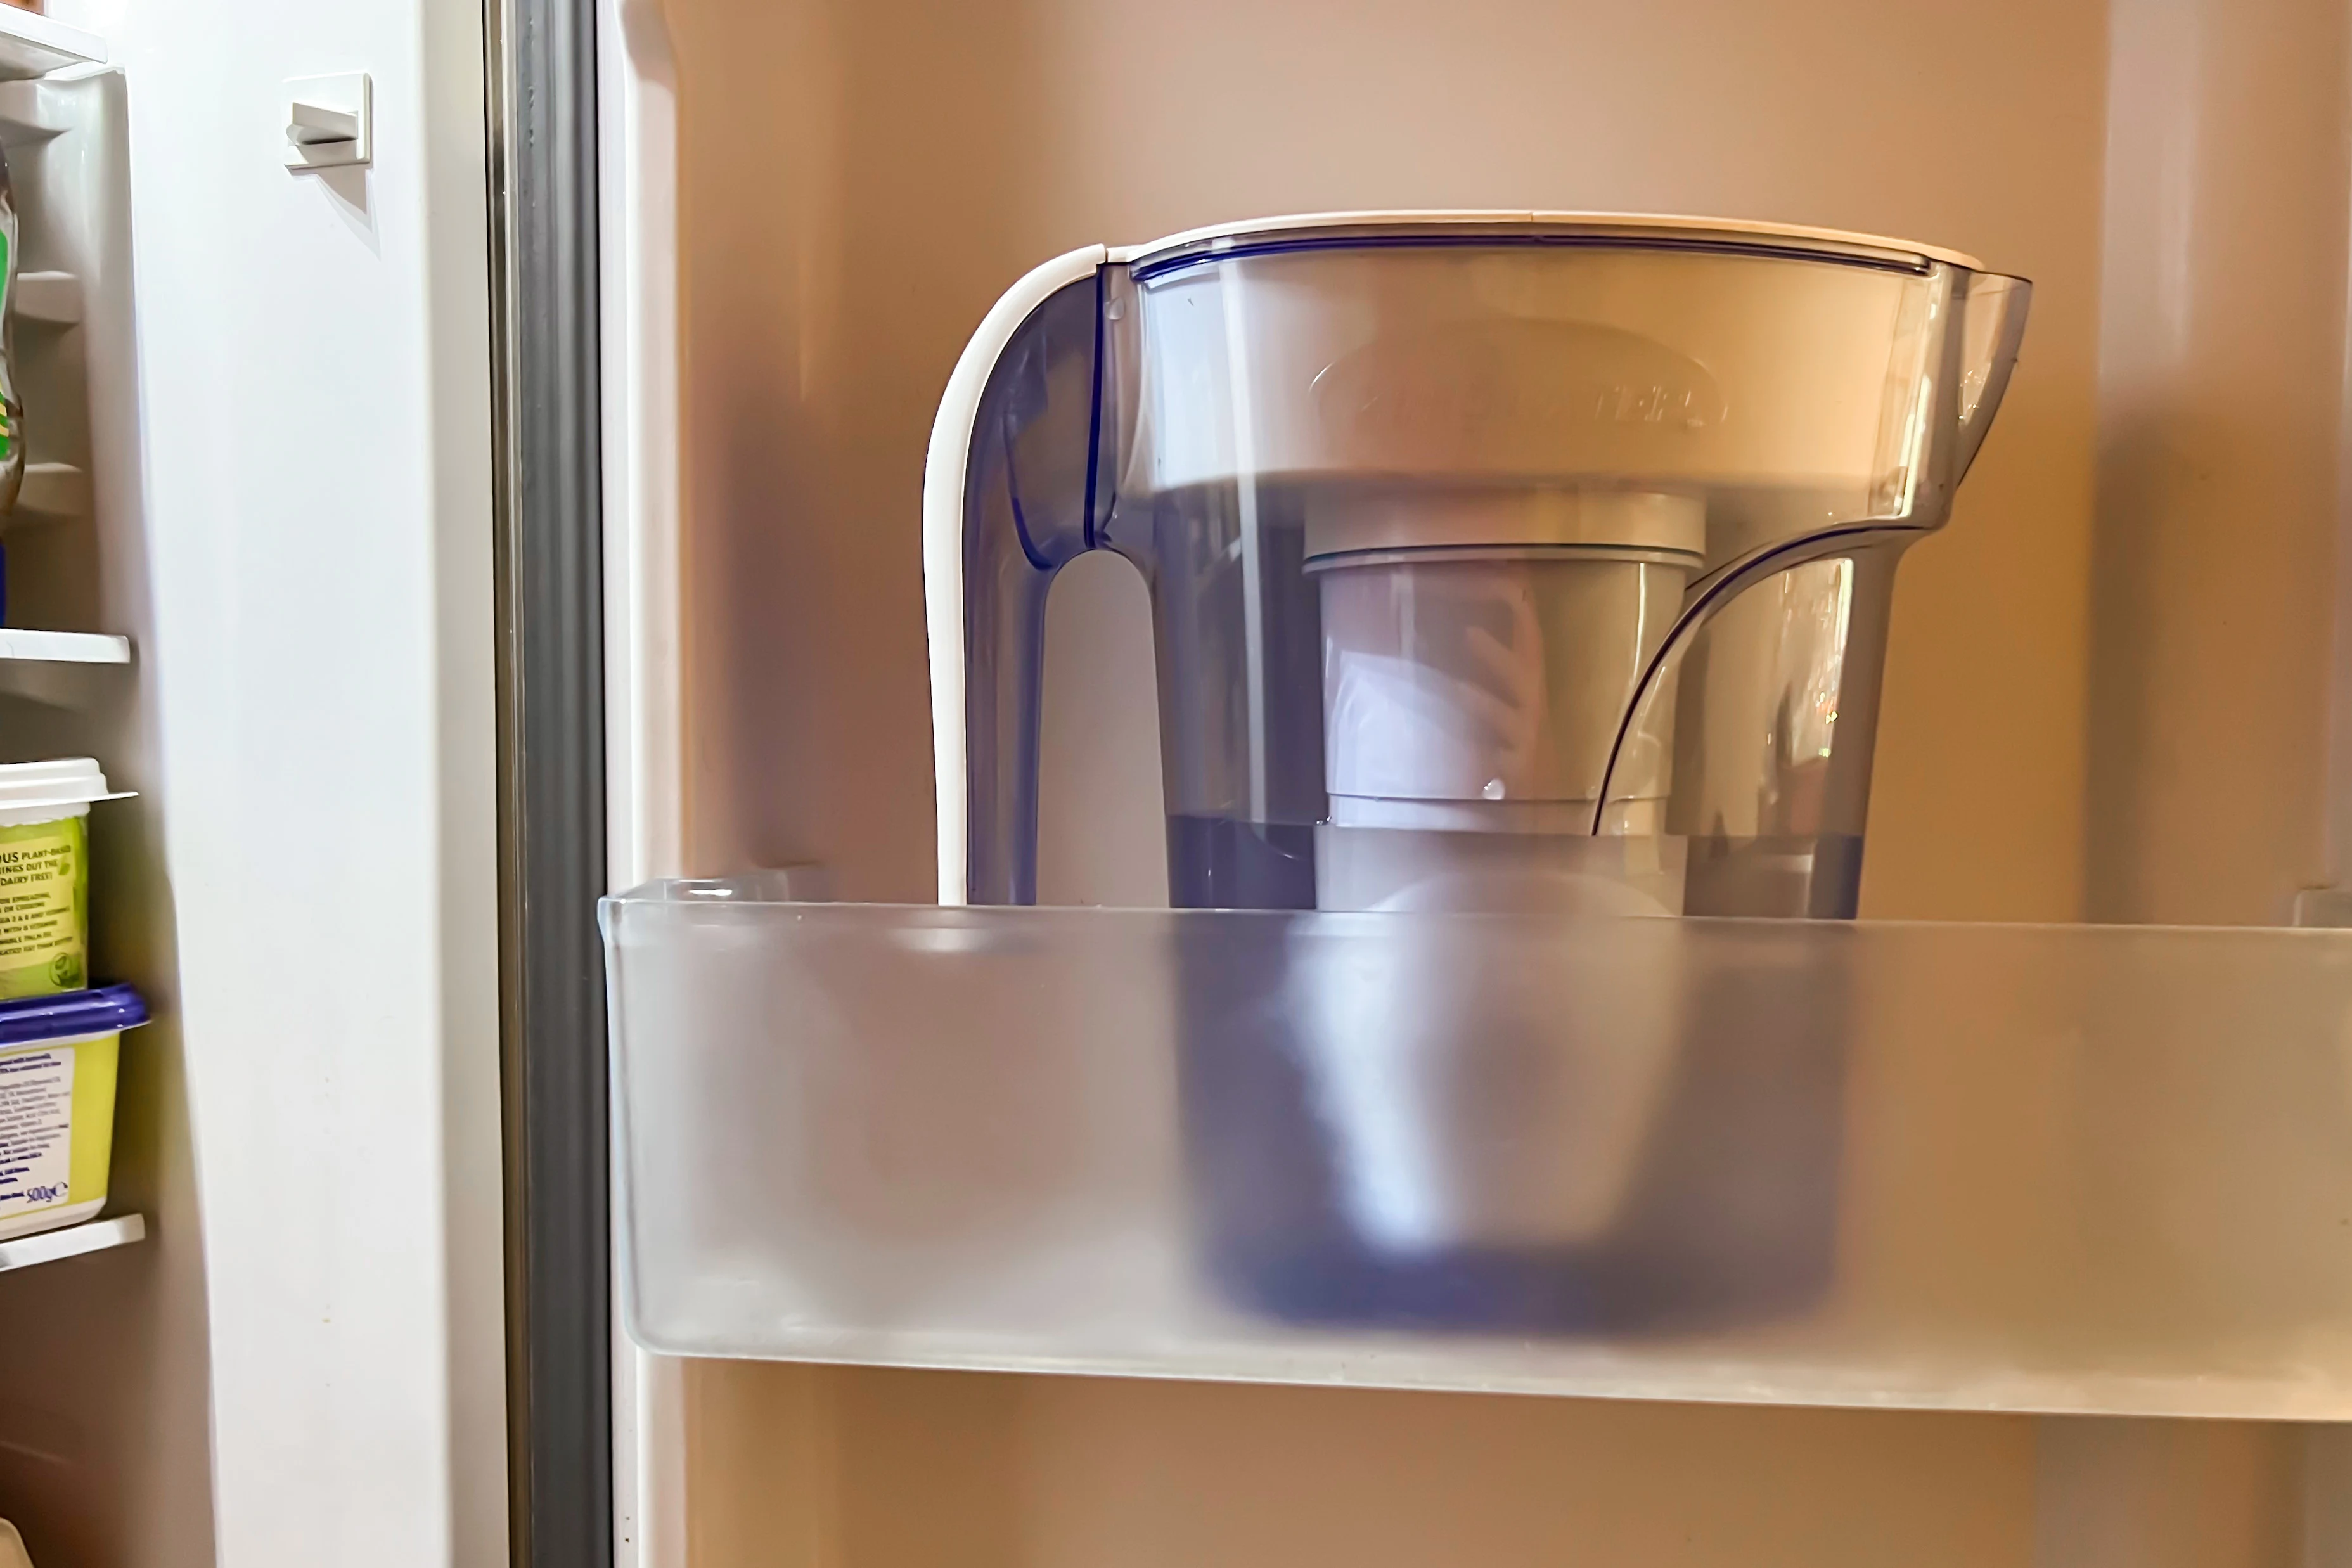 A 7 cup water jug with filter in a fridge door